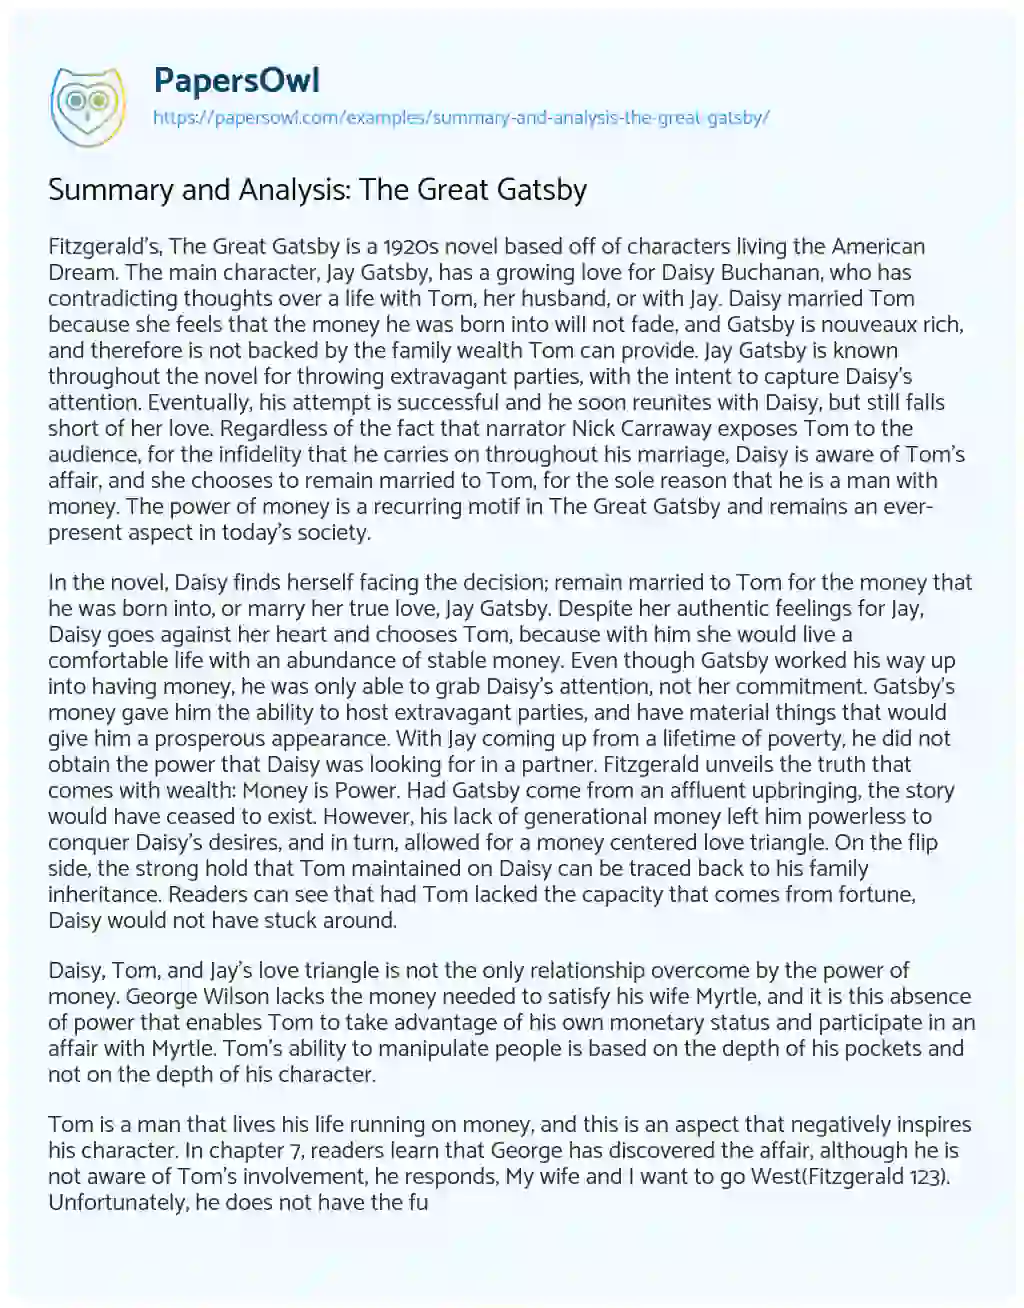 analytical essay great gatsby